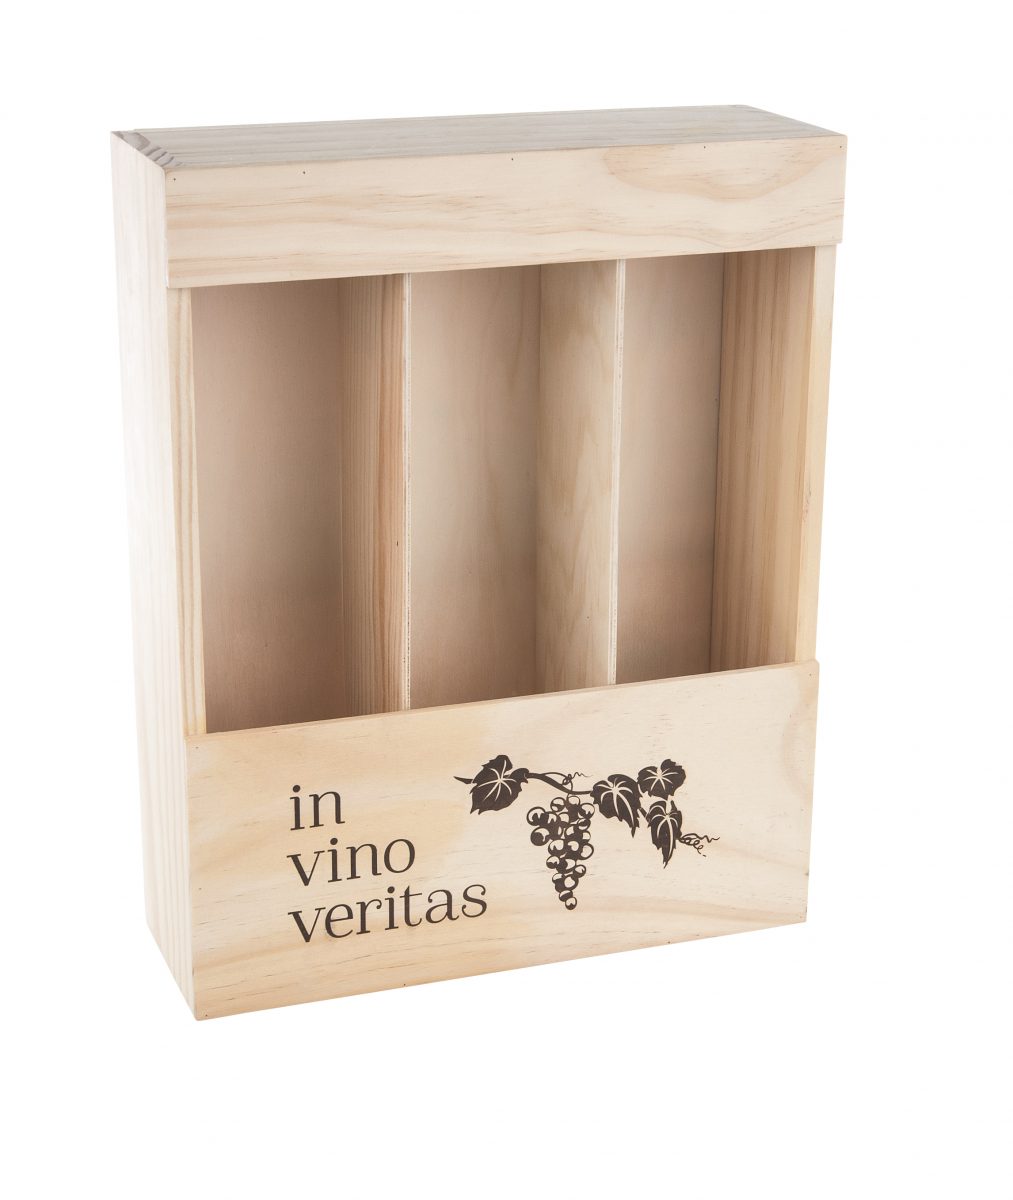 the wine box